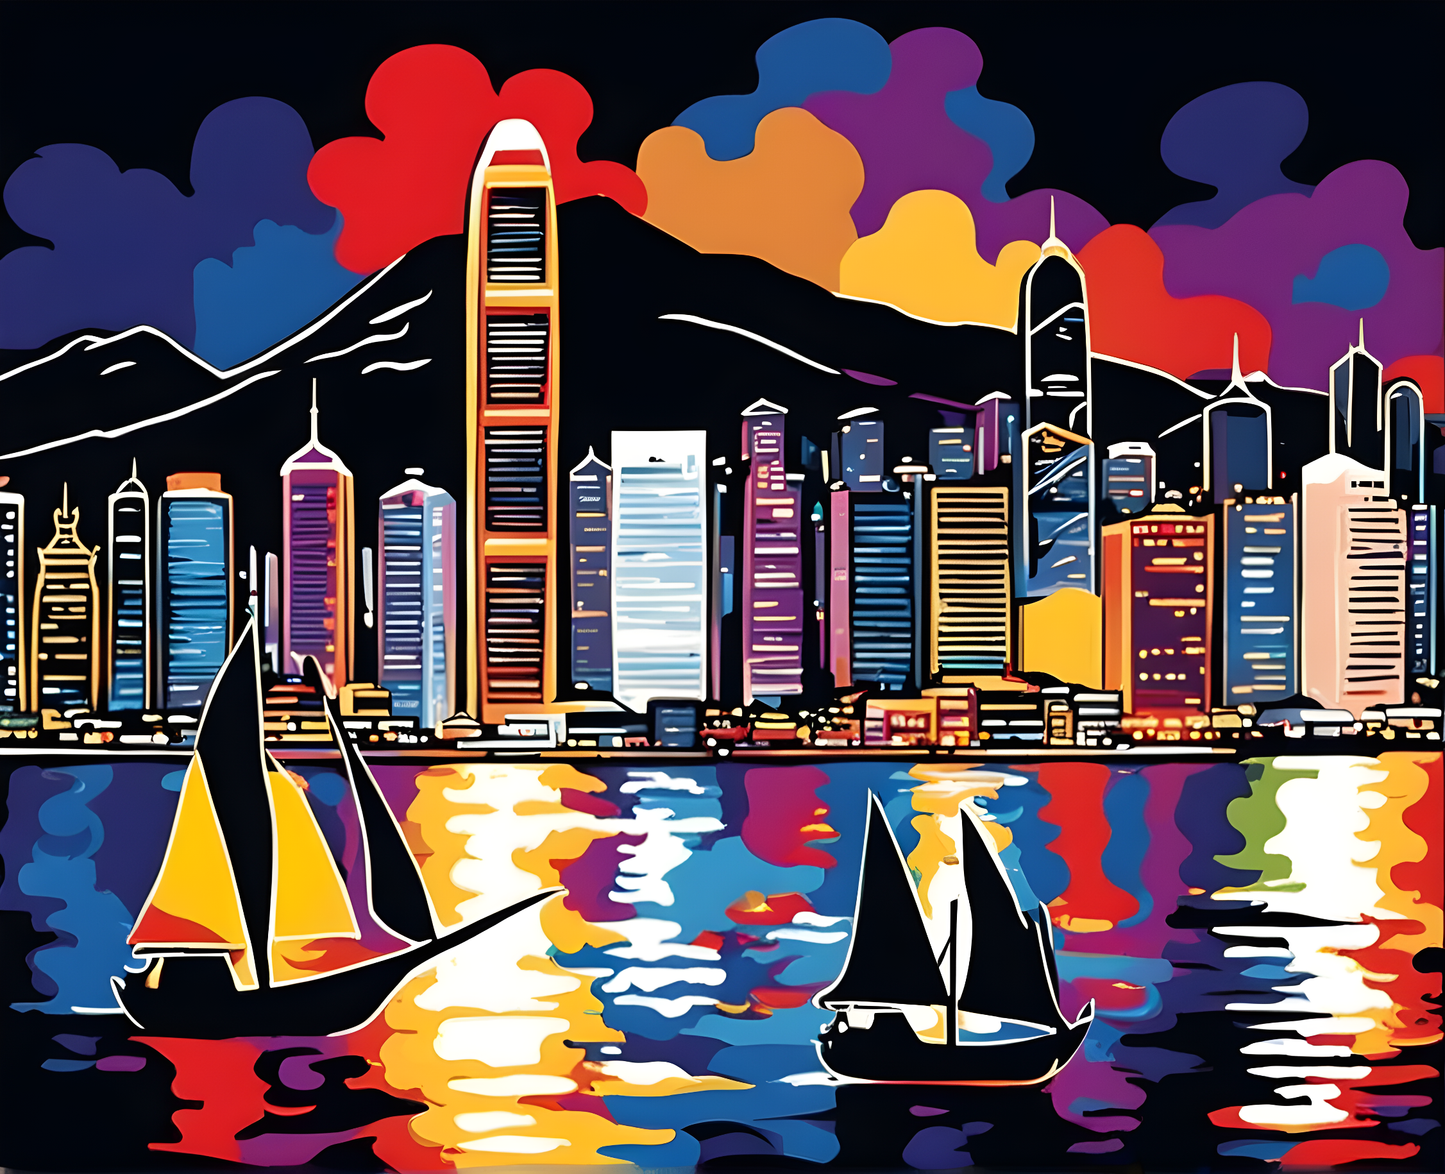 Hong Kong Skyline at Night (1) - Van-Go Paint-By-Number Kit